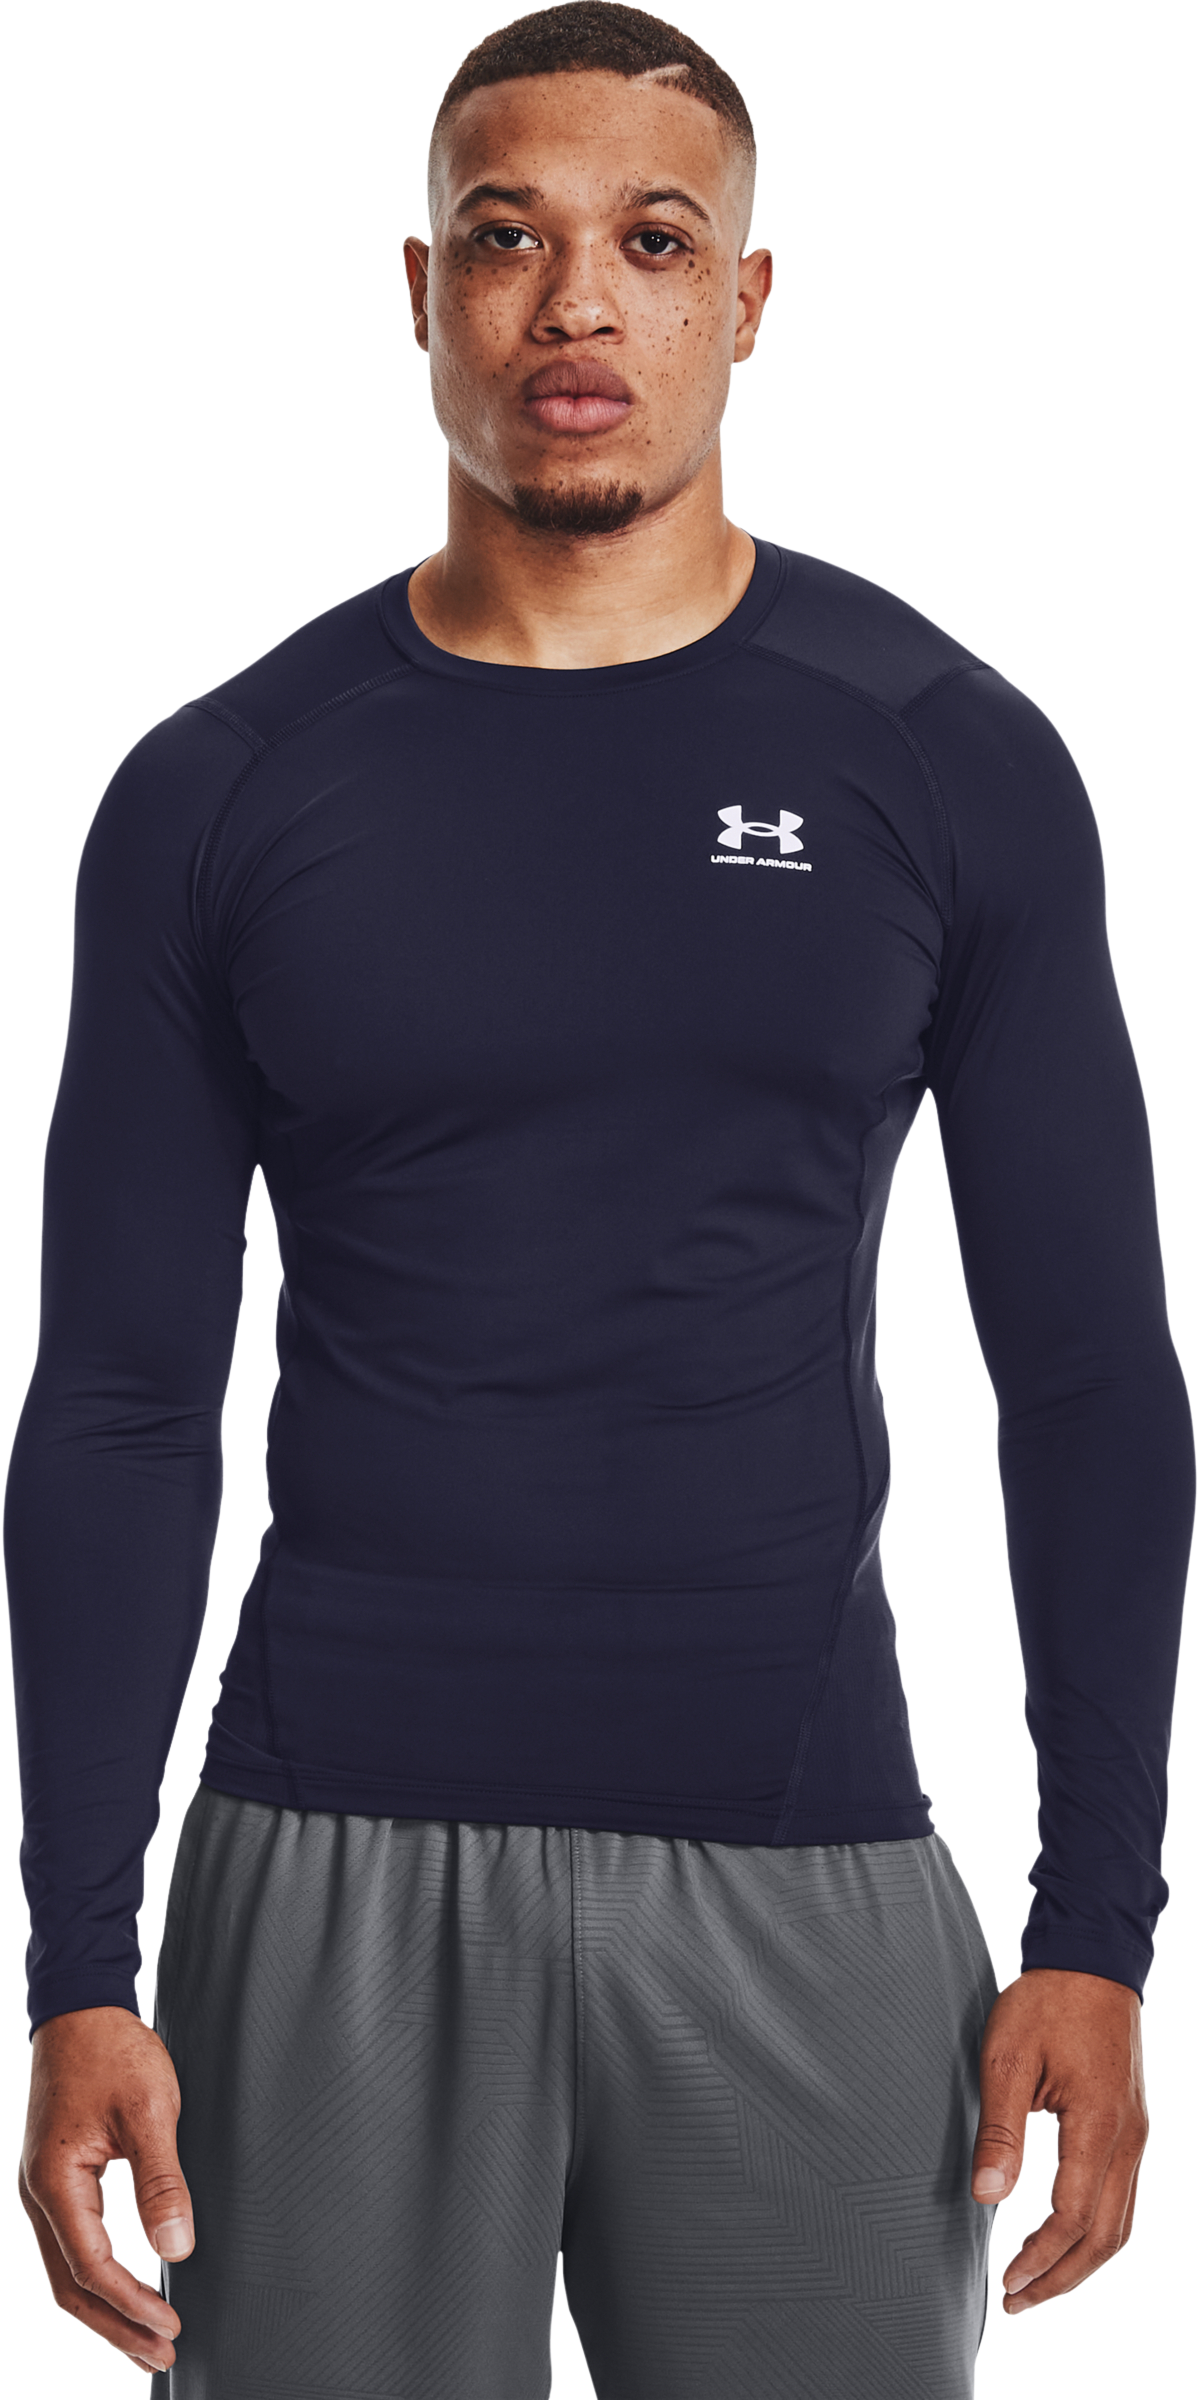 Under Armour Men's HeatGear Compression Green Long-Sleeve T-Shirt (M) 